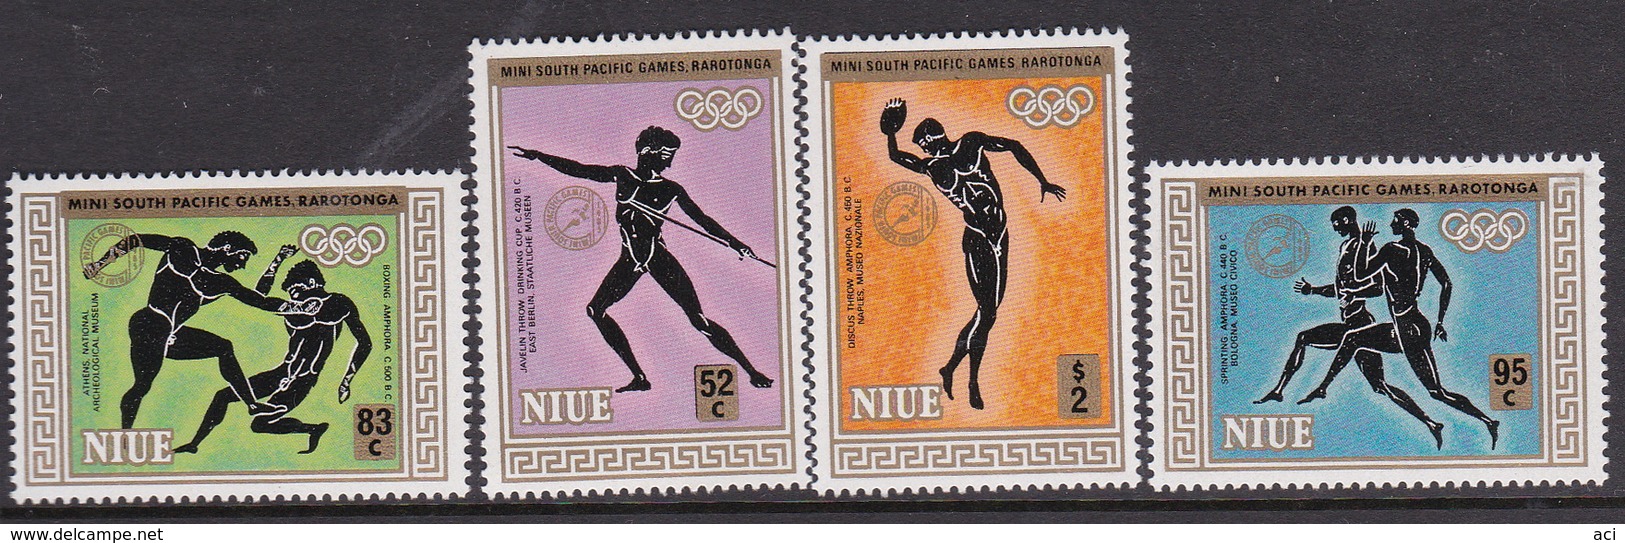 Niue 1985 SG 591-94 Mini South Pacific Games MNH - Niue